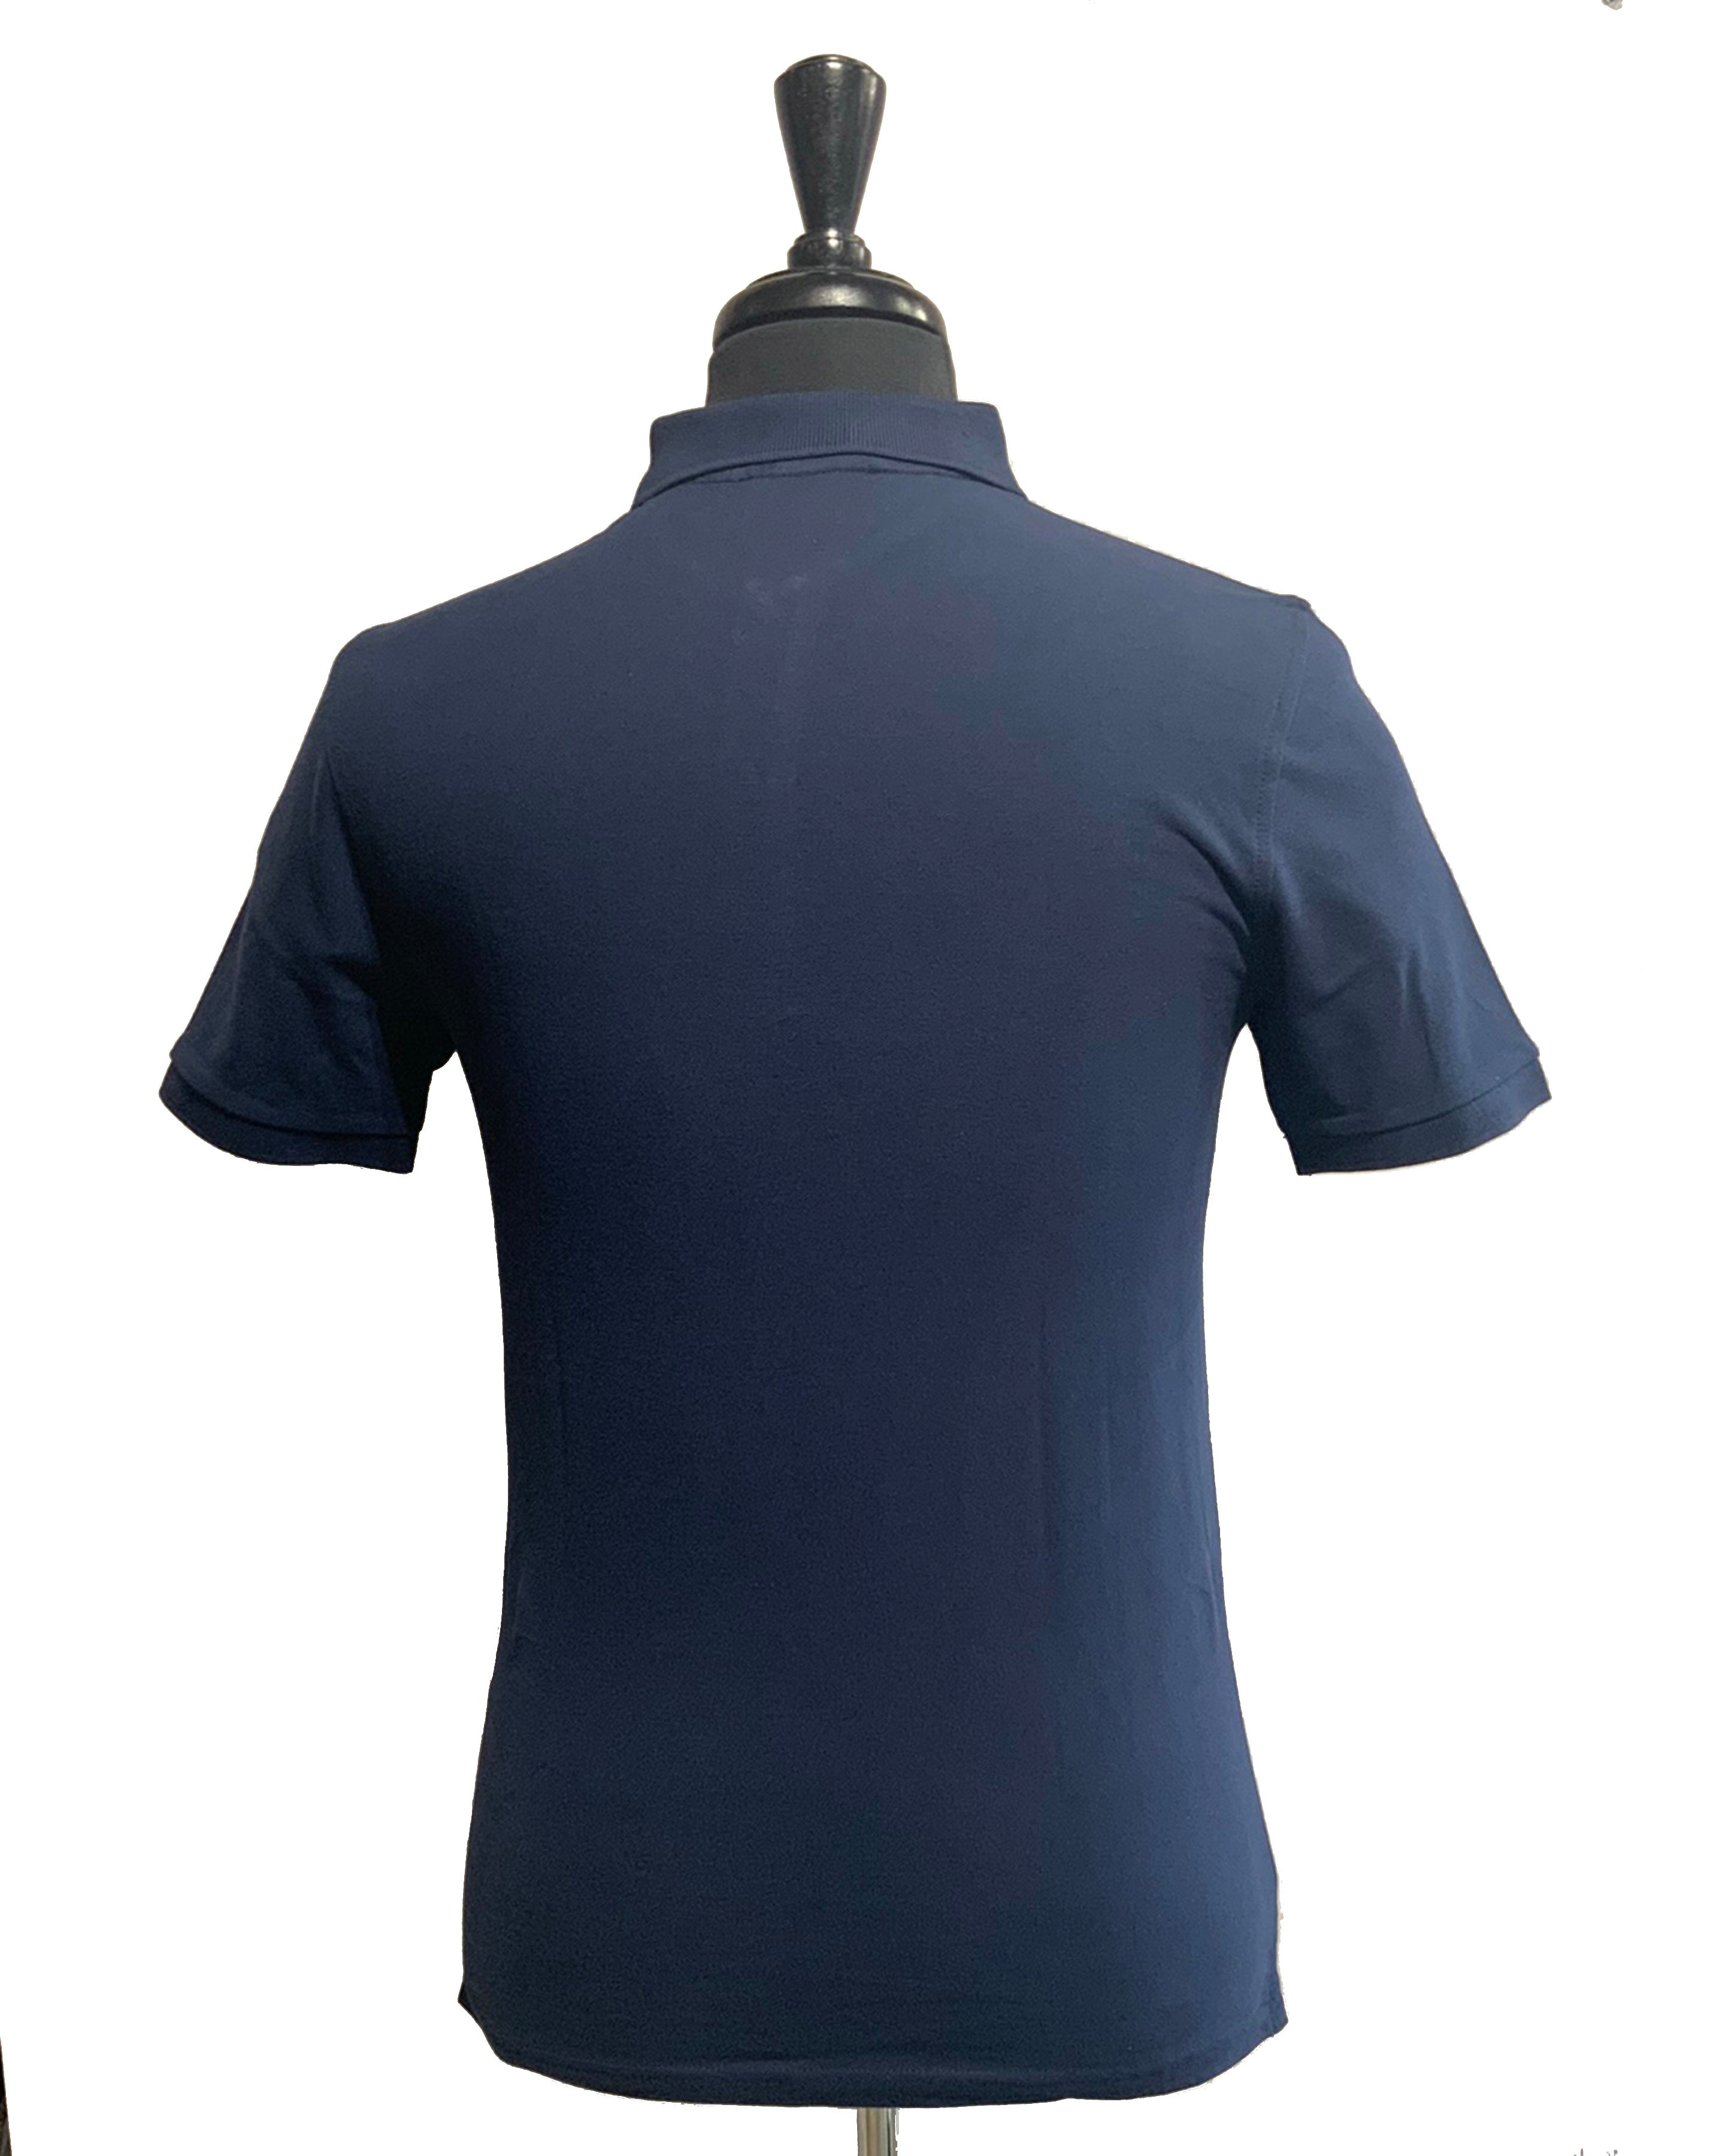 VILEBREQUIN - Navy Marino Blue PIQUET Cotton SLIM FITTING Polo Shirt VBMSW0087-894